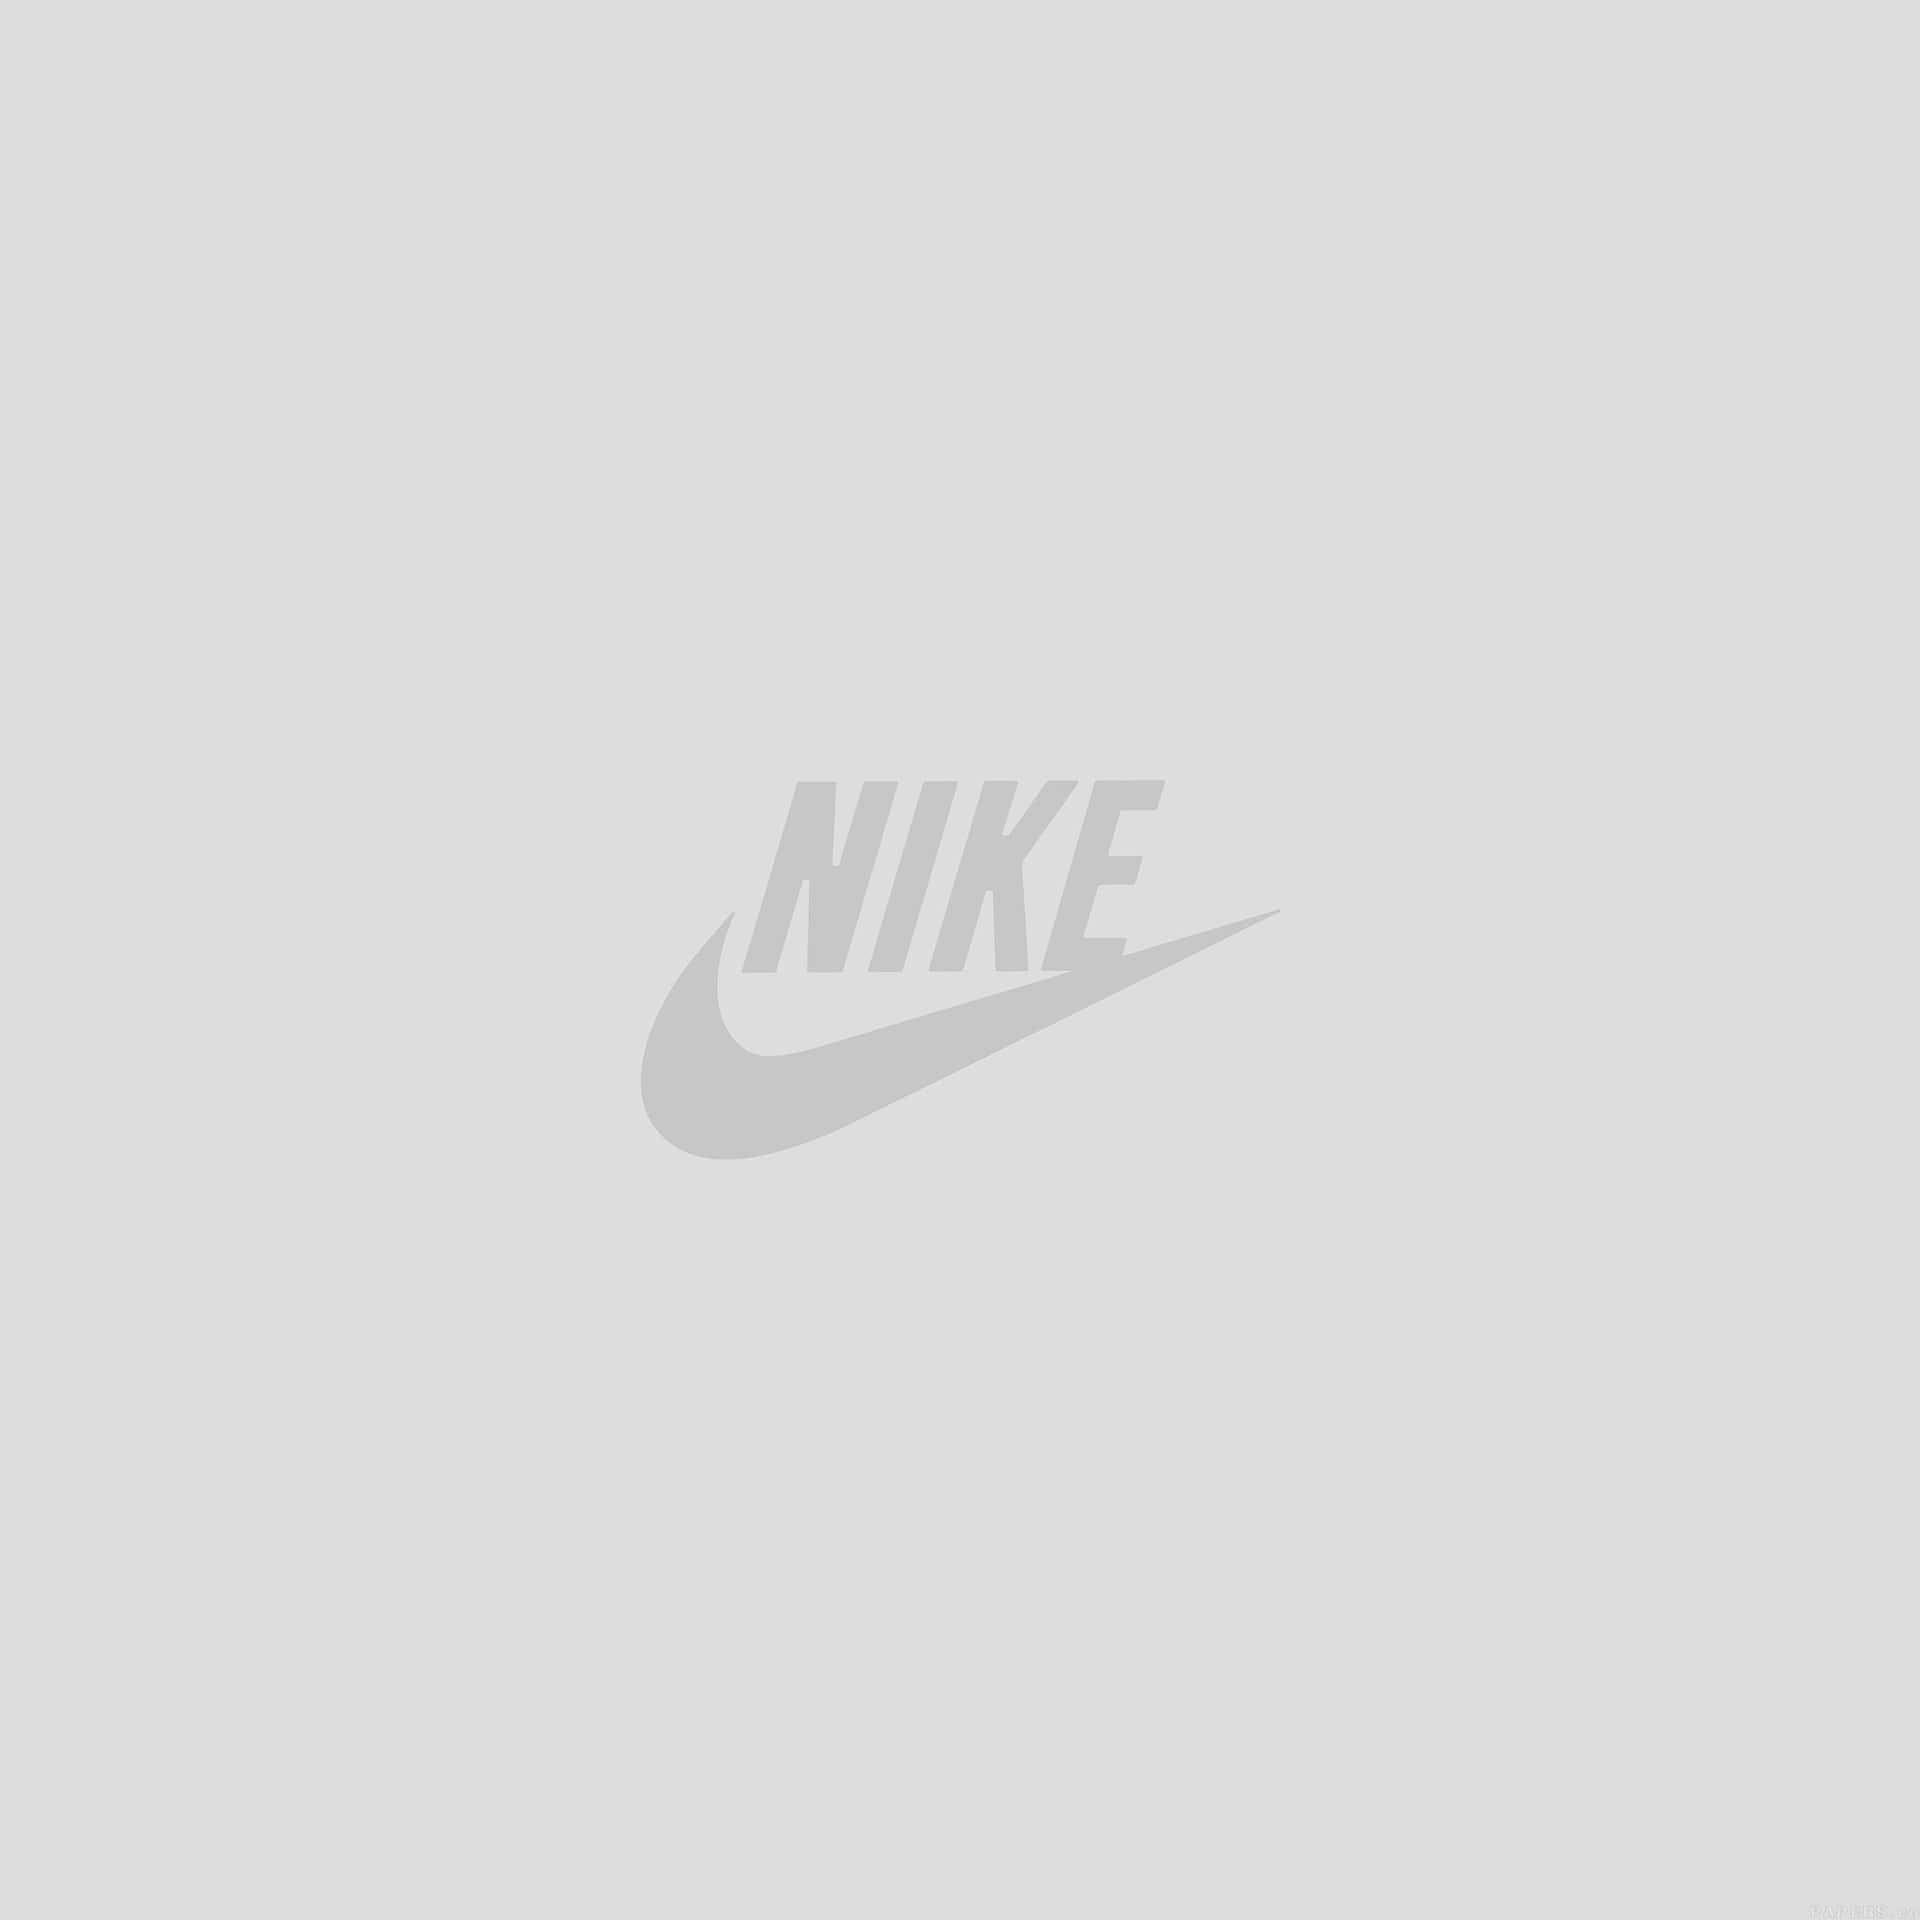 Minimalistisk Nike i hvid iPad tapet Wallpaper